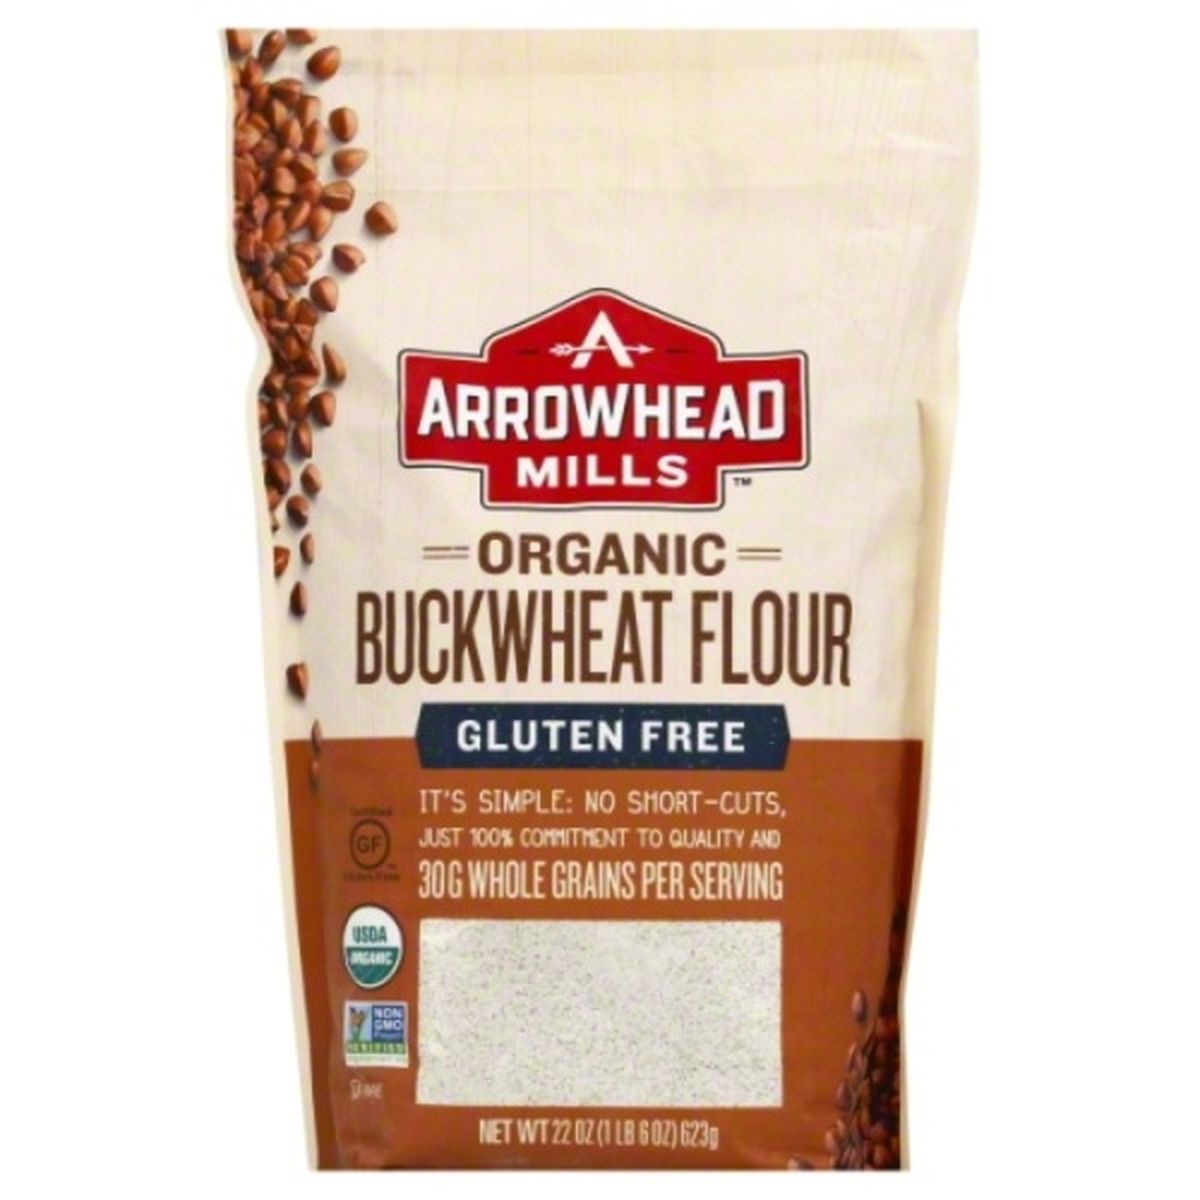 Calories in Arrowhead Mills Buckwheat Flour, Gluten Free, Organic